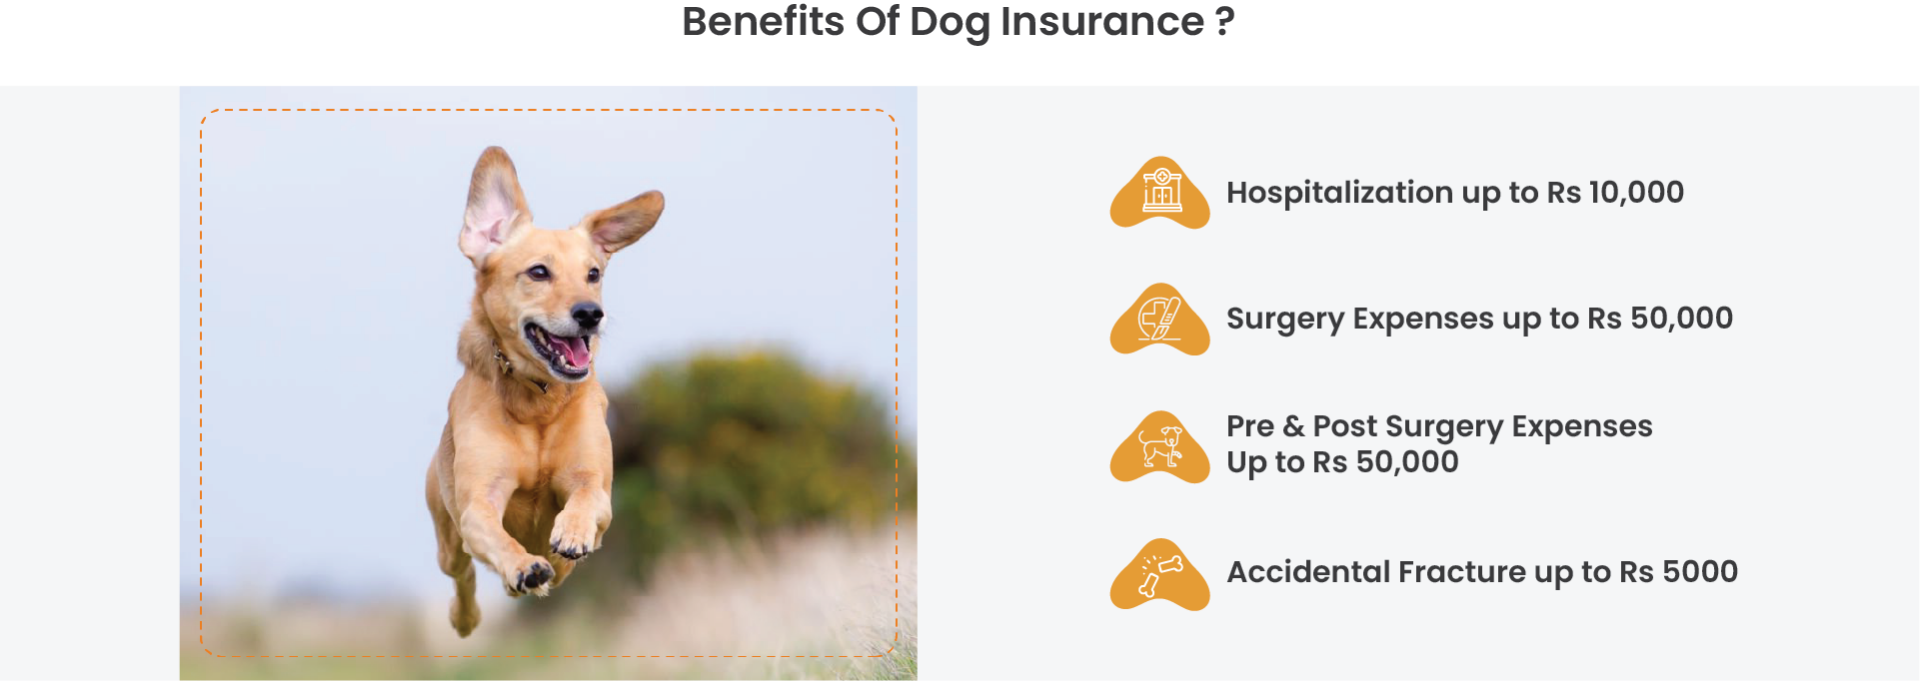 Best Dog Insurance